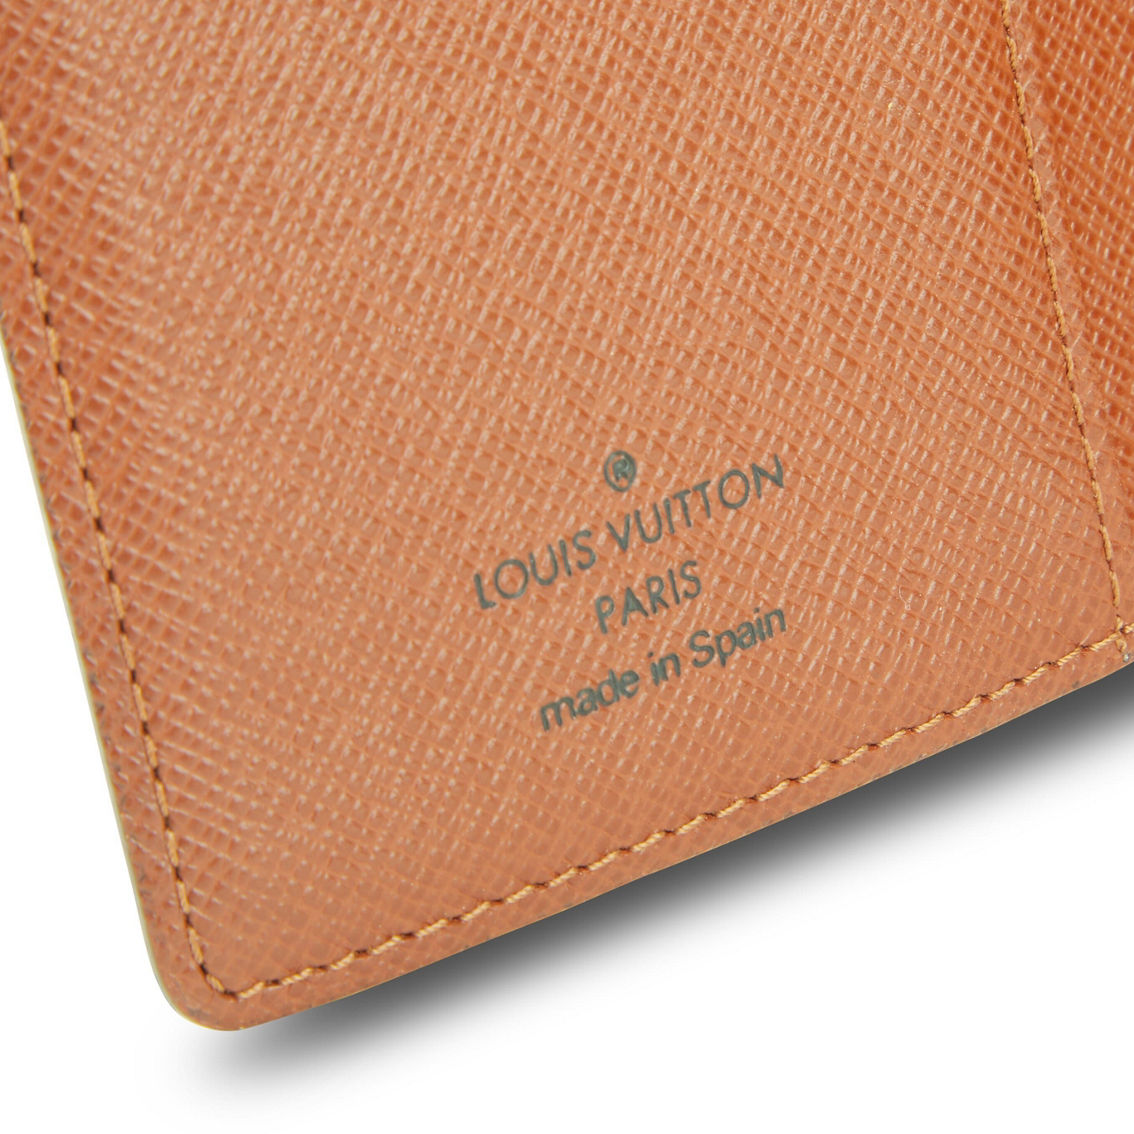 Louis Vuitton Agenda PM Monogram (Pre-Owned) - Image 5 of 5